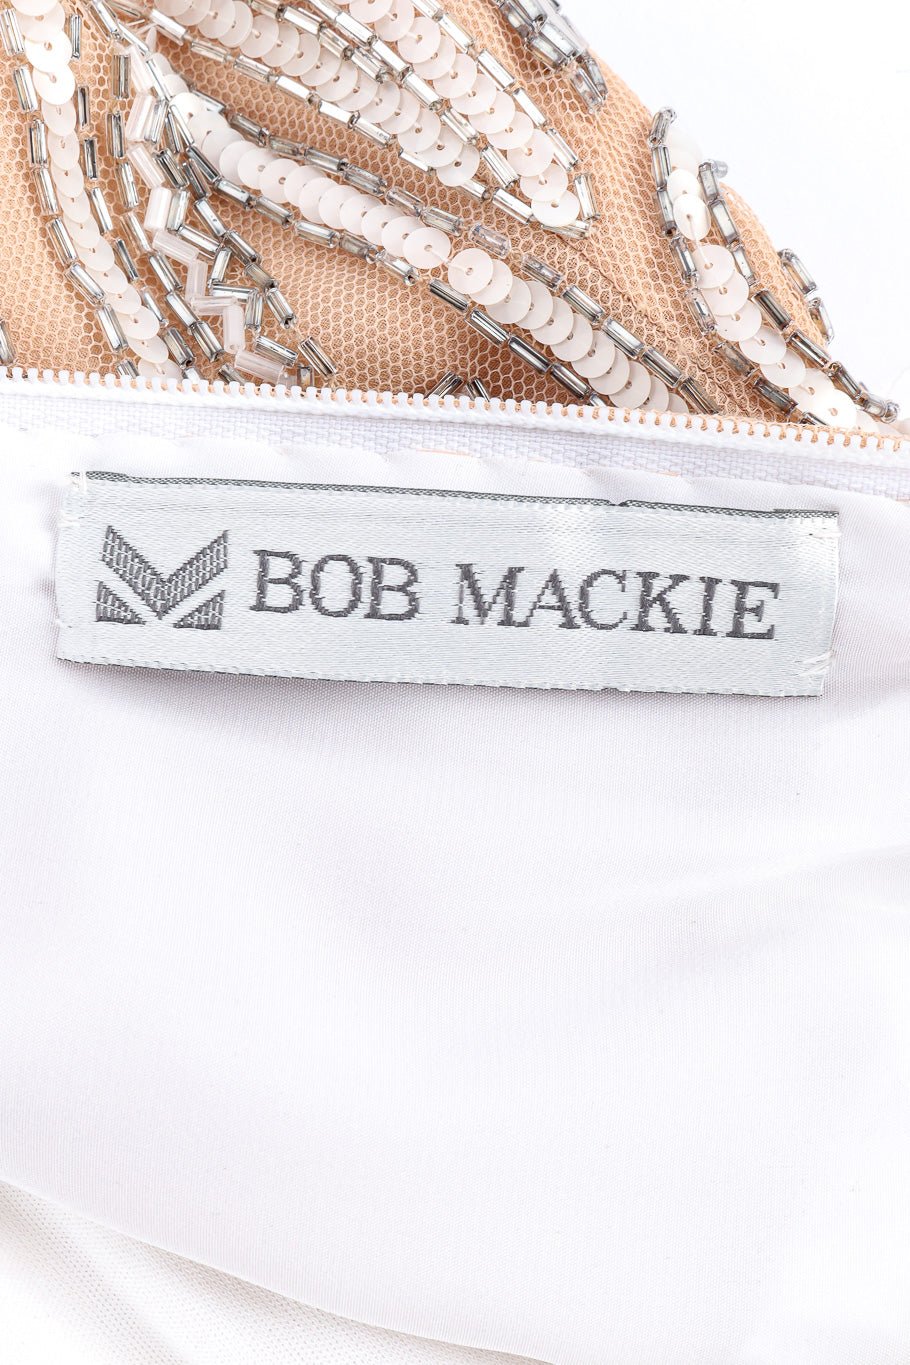 Bob Mackie sequin swirl empire gown designer label @recessla